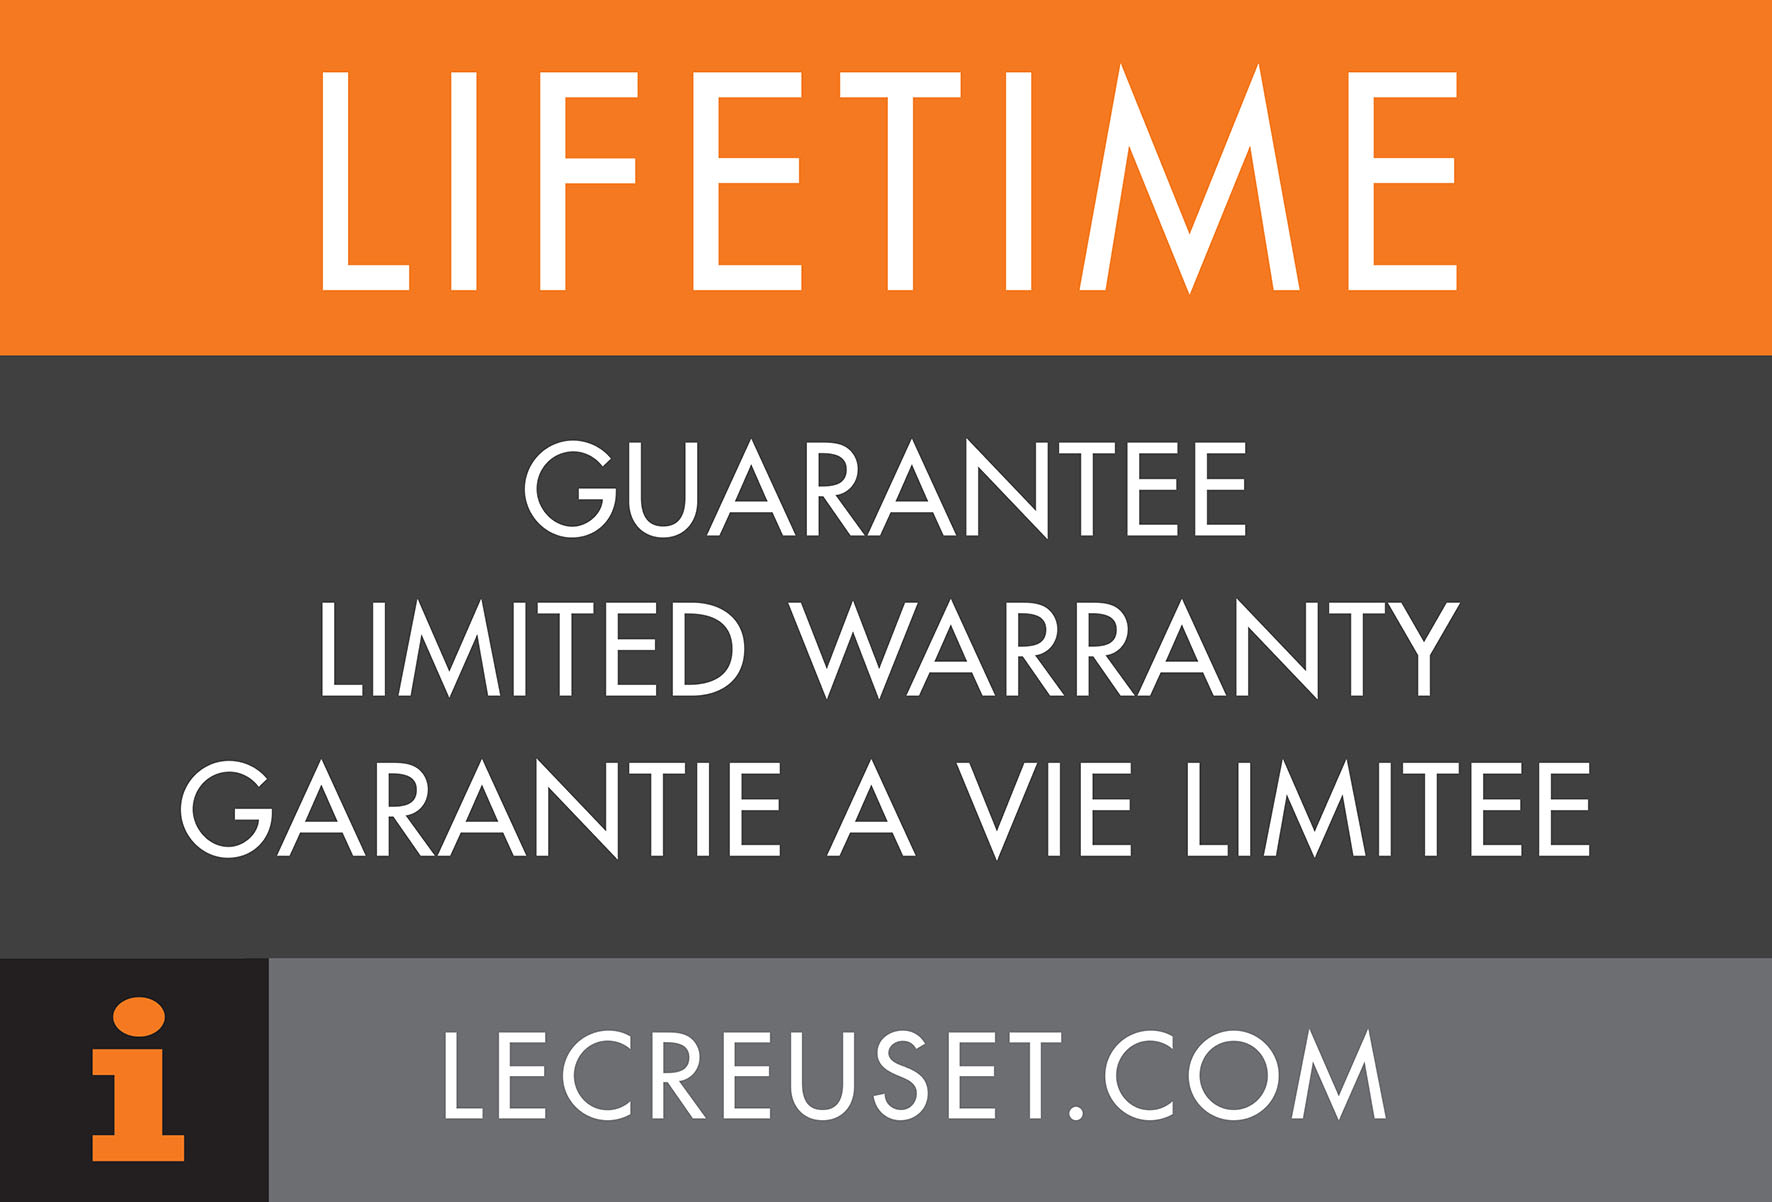 Lifetime guarantee limited warranty garantie a vie limitee: Lecruset.com